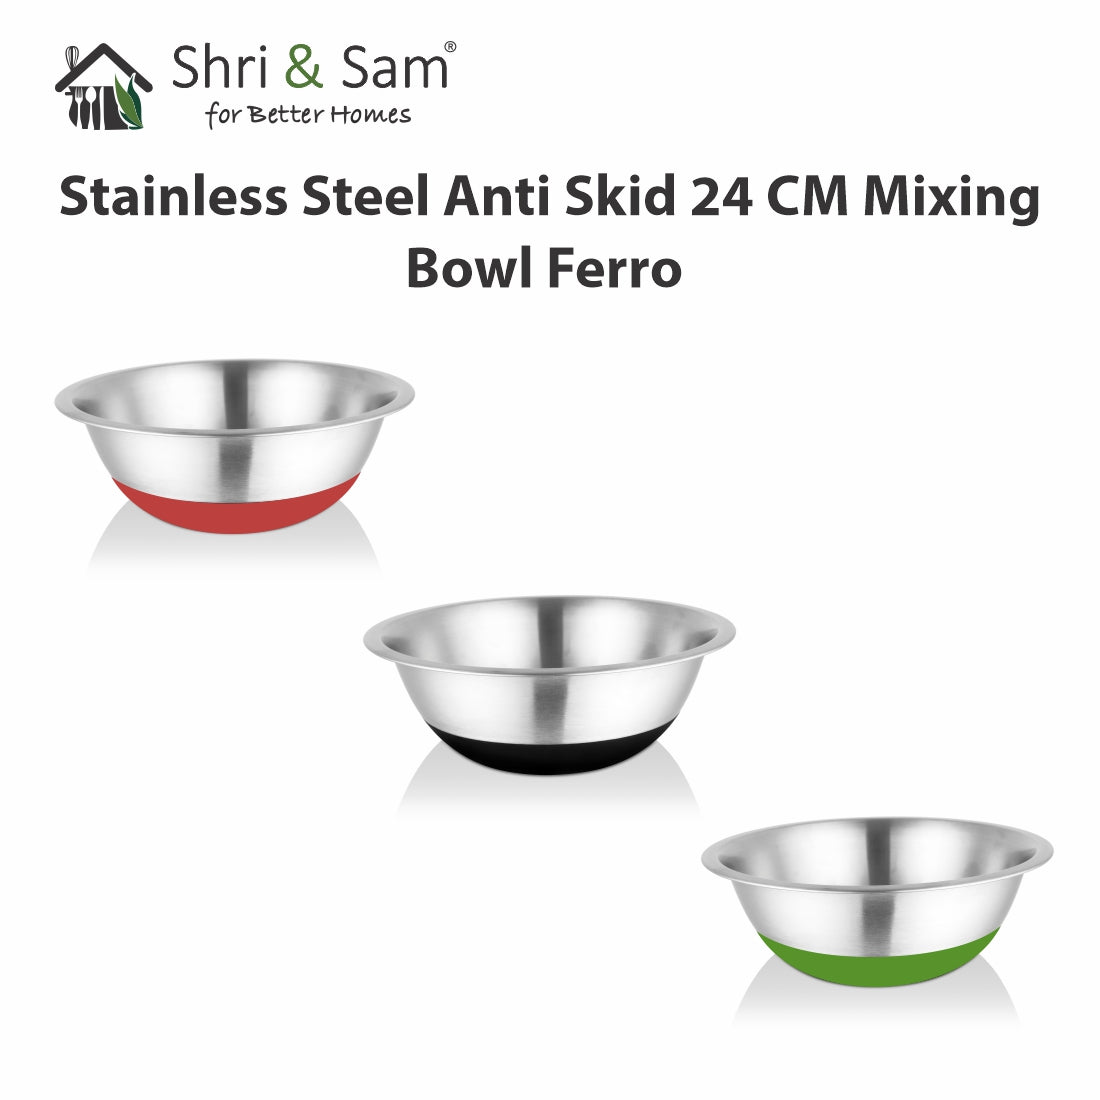 Stainless Steel Anti Skid 24 CM Mixing Bowl Ferro